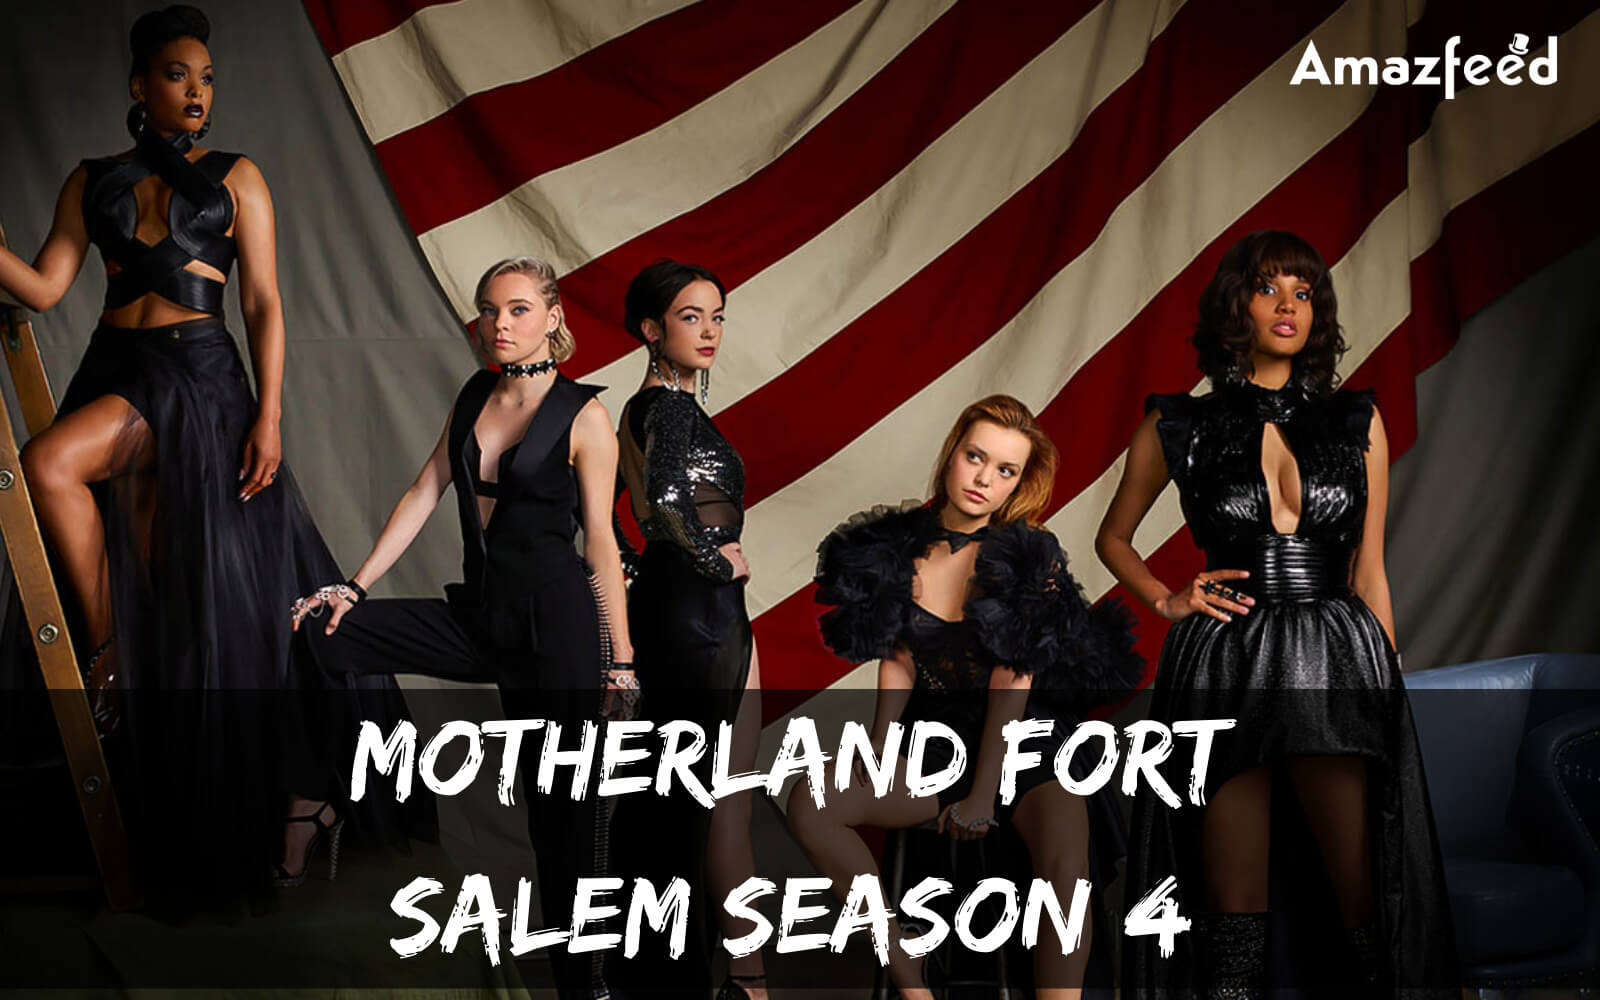 Motherland Fort Salem Season 4 release date